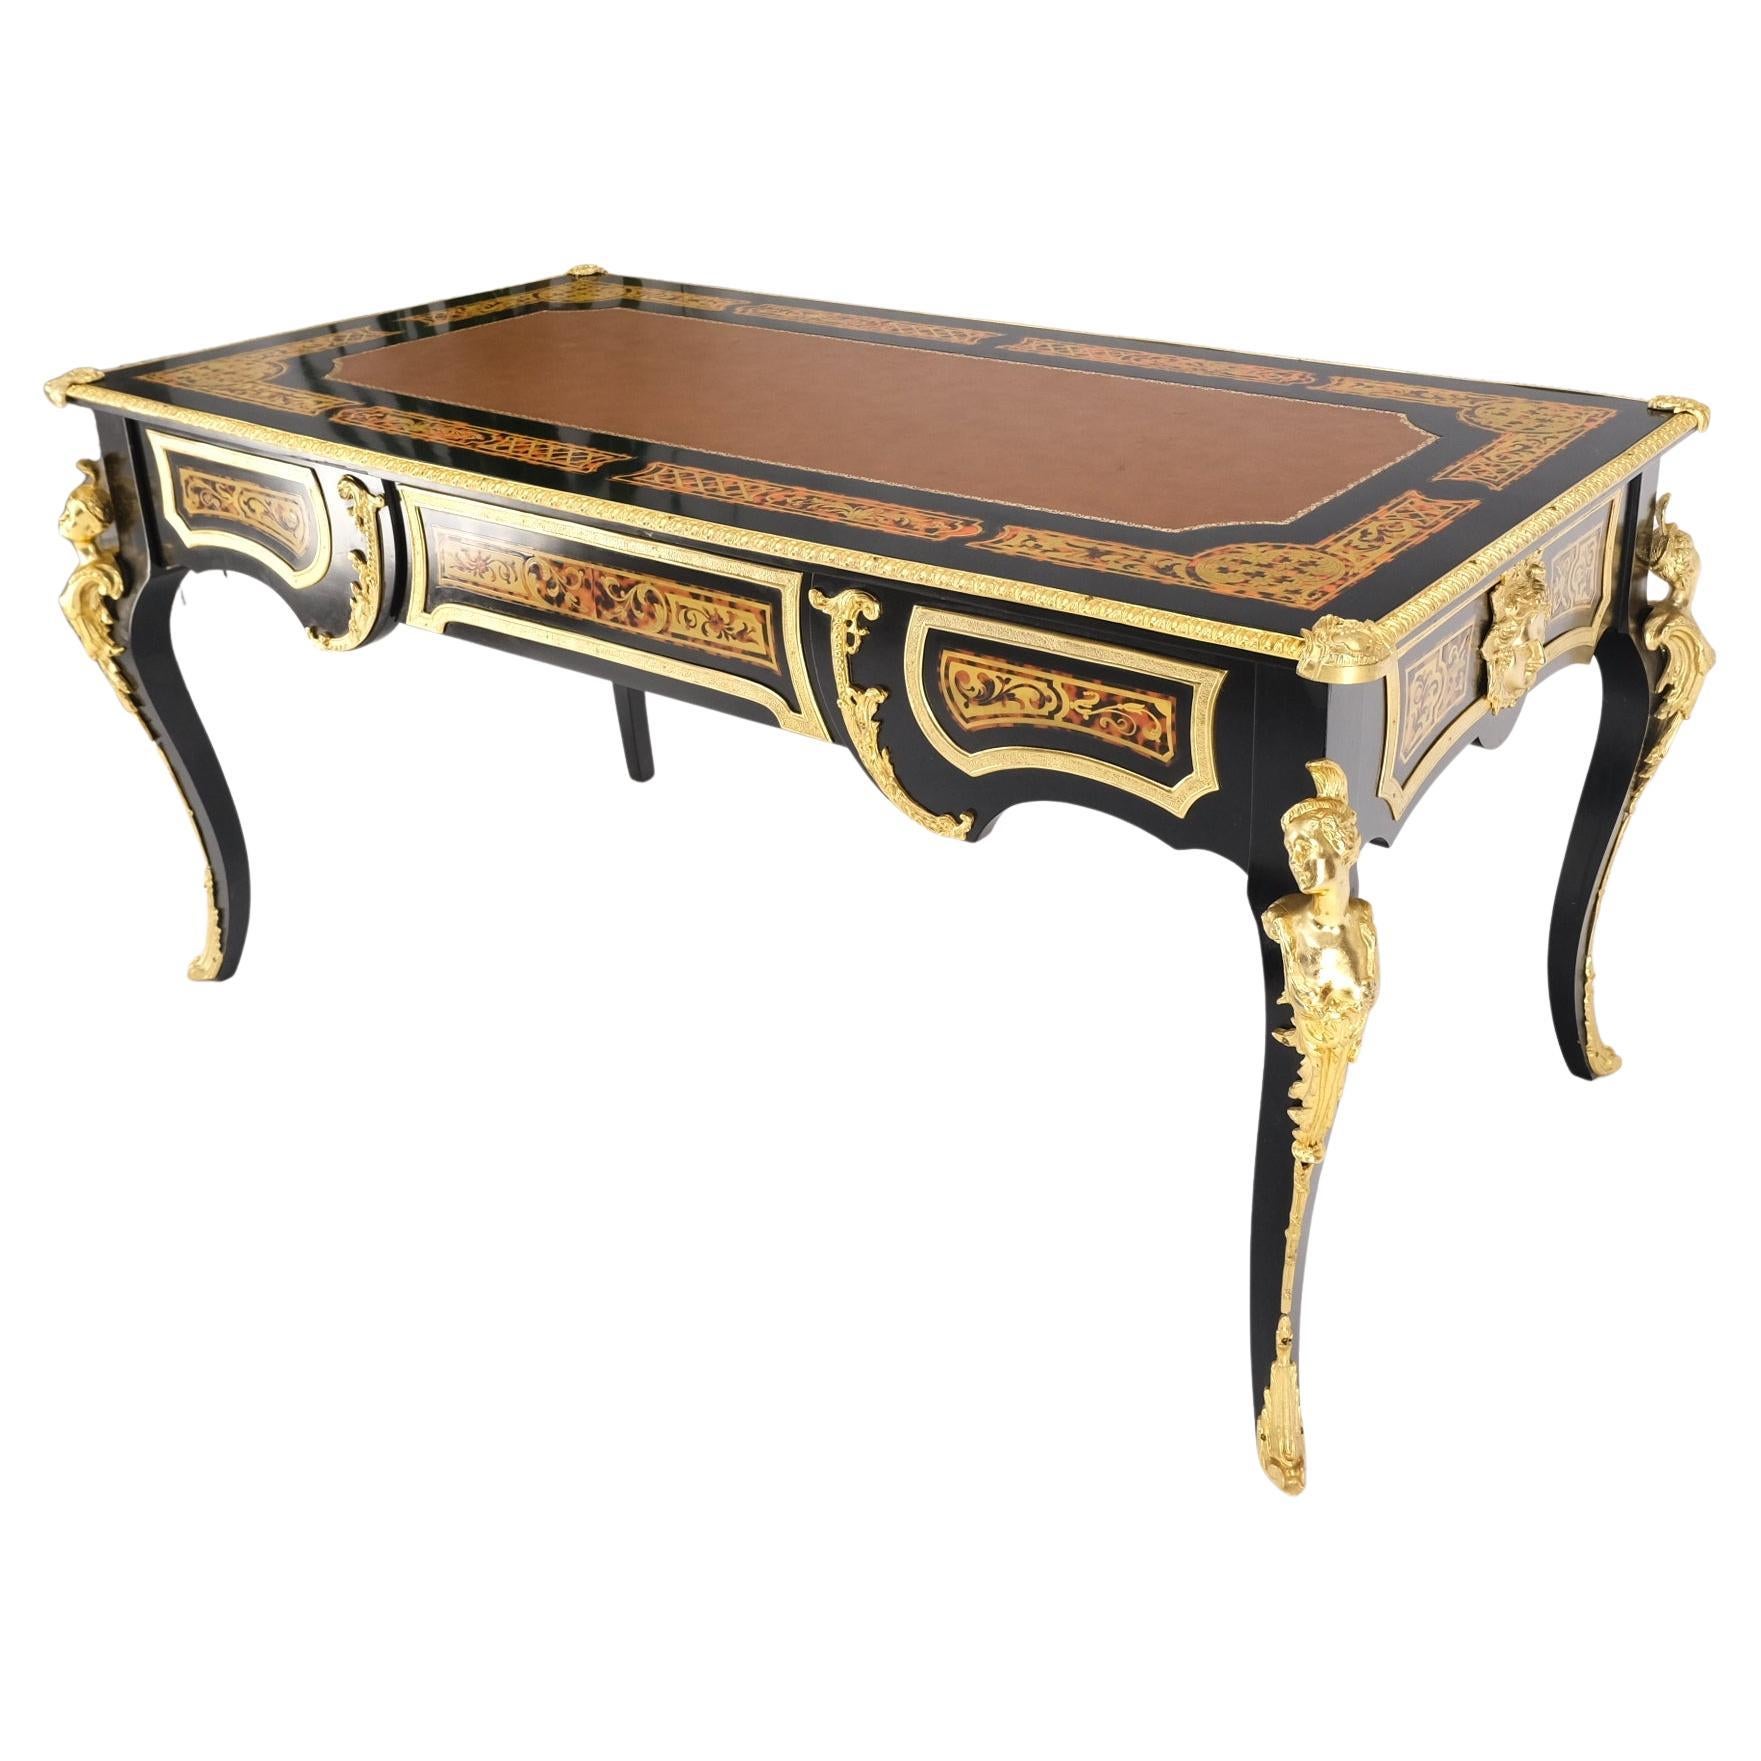 Enamel Decorated French Louis Revival Ormolu Mounted Bureau Desk Table Console 